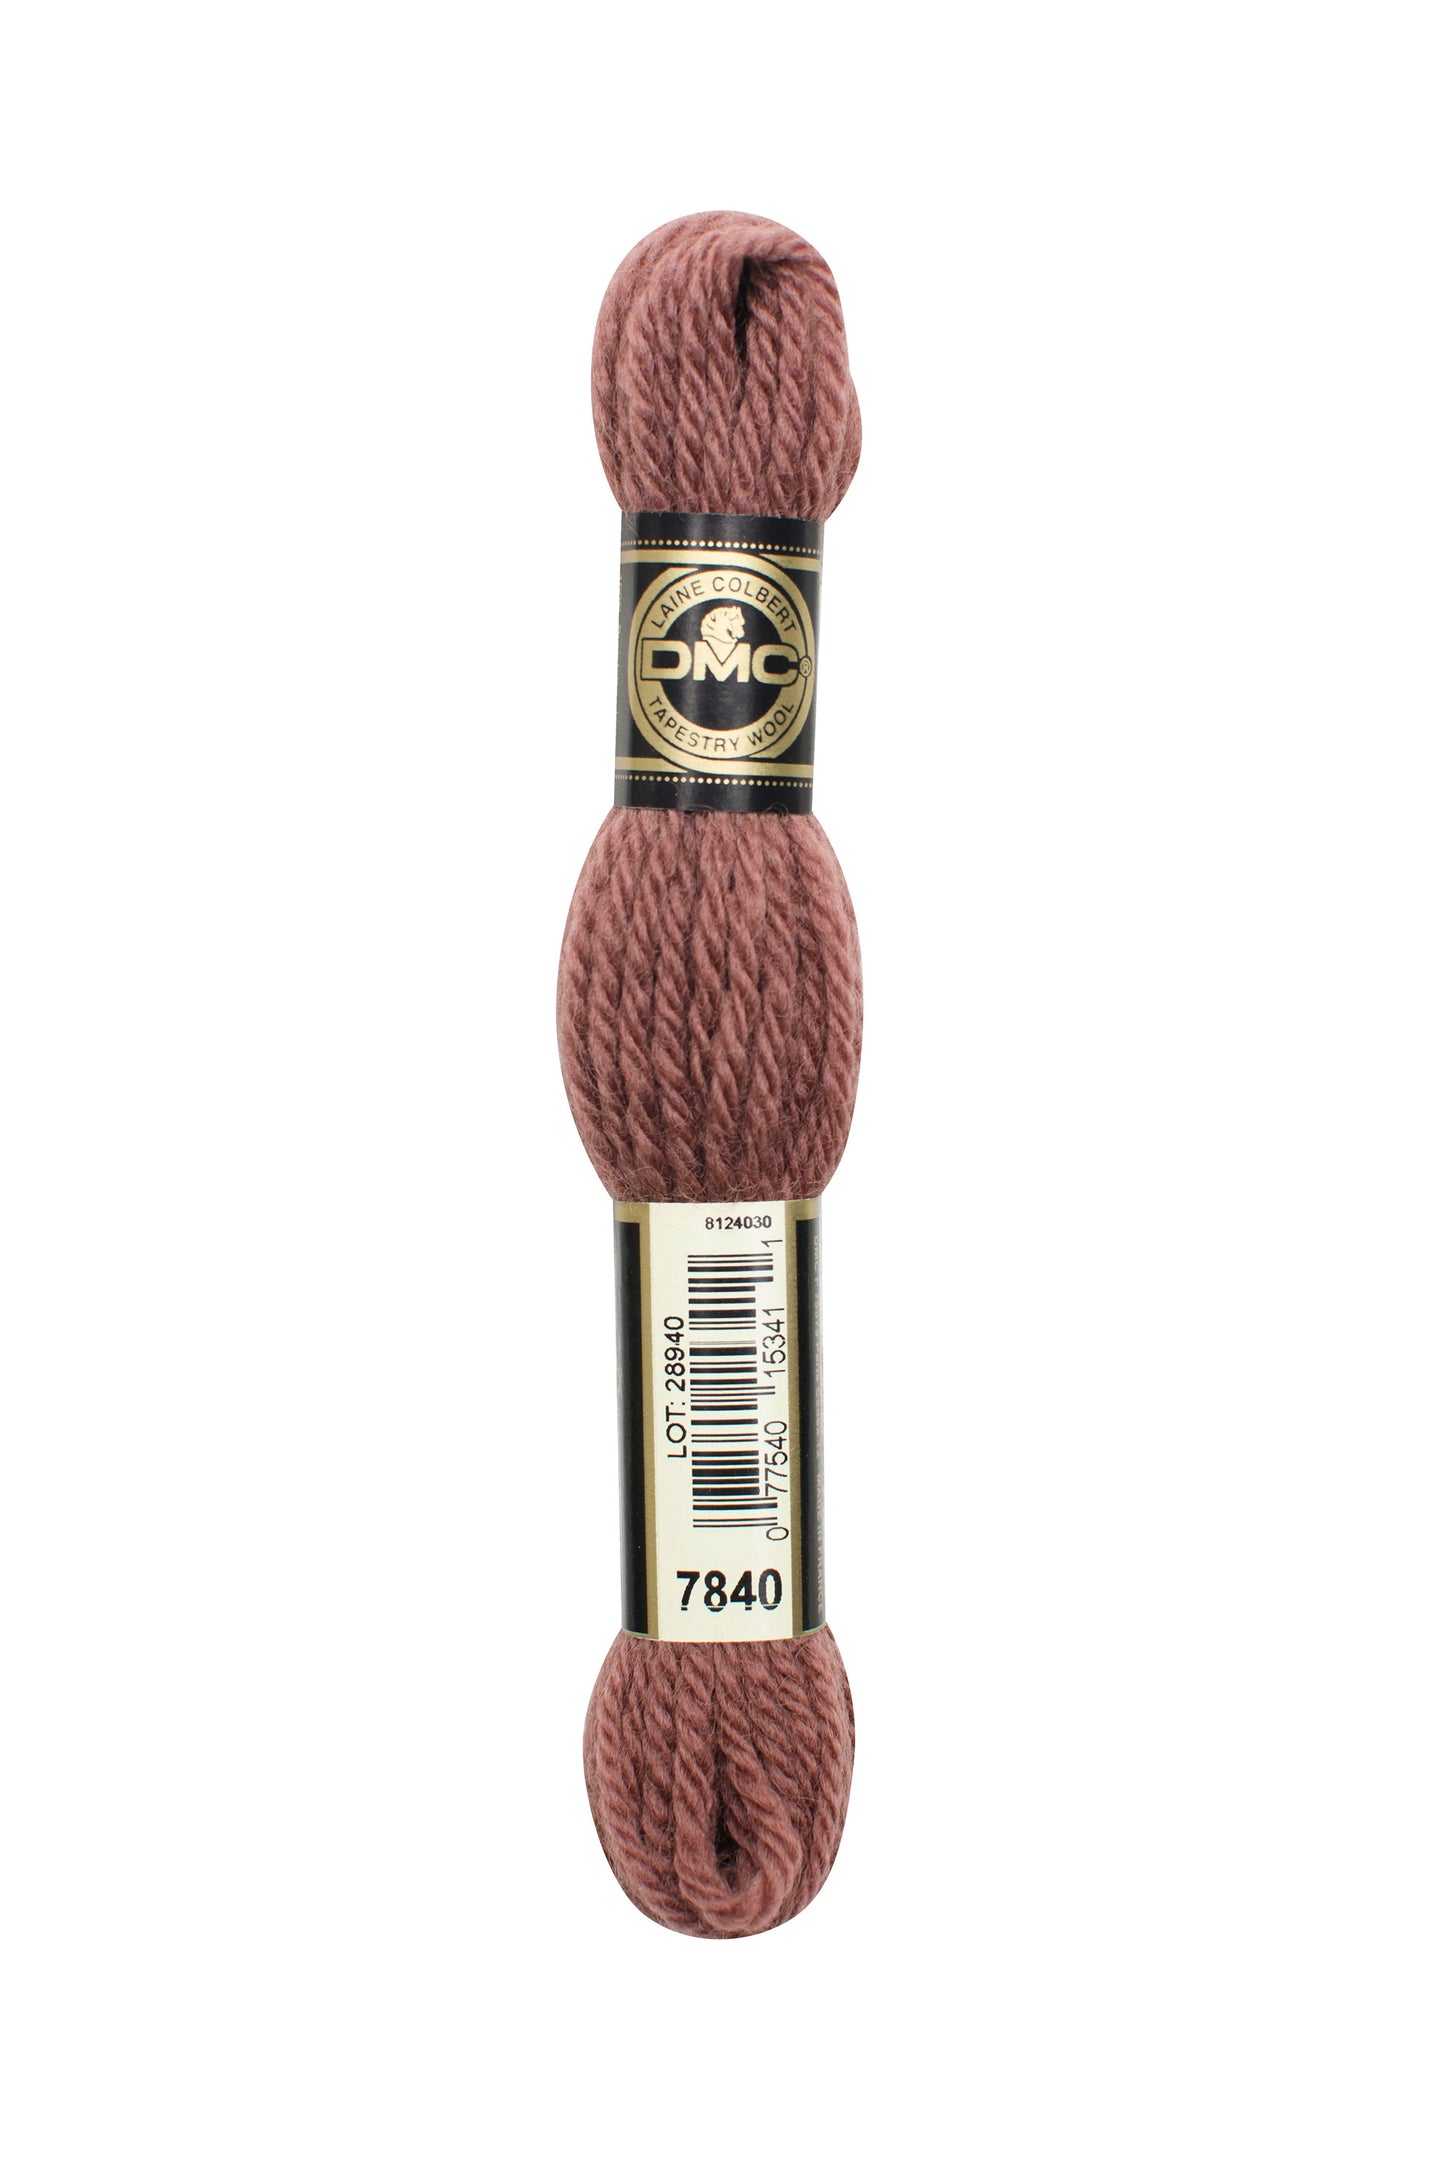 7840 – DMC Tapestry Wool